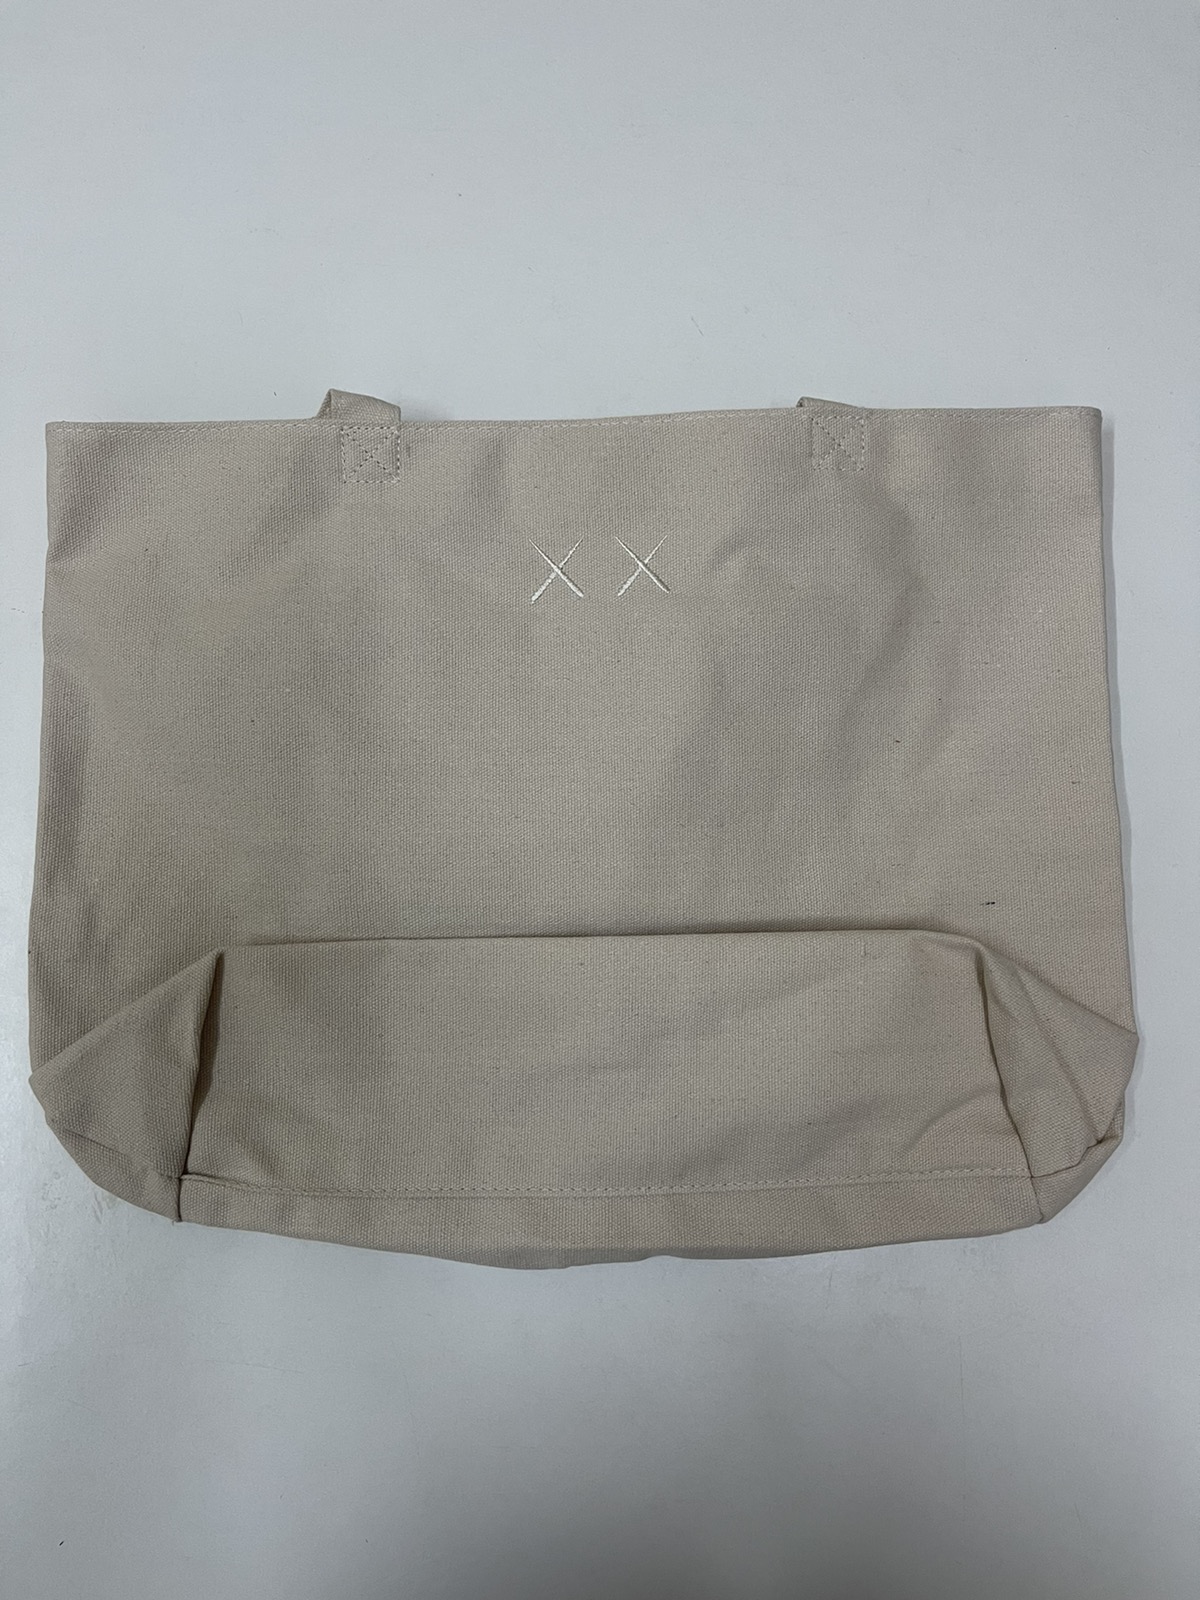 Very Rare - Kaws Tote Bag Limited Edition / Uniqlo / Evangelion - 9